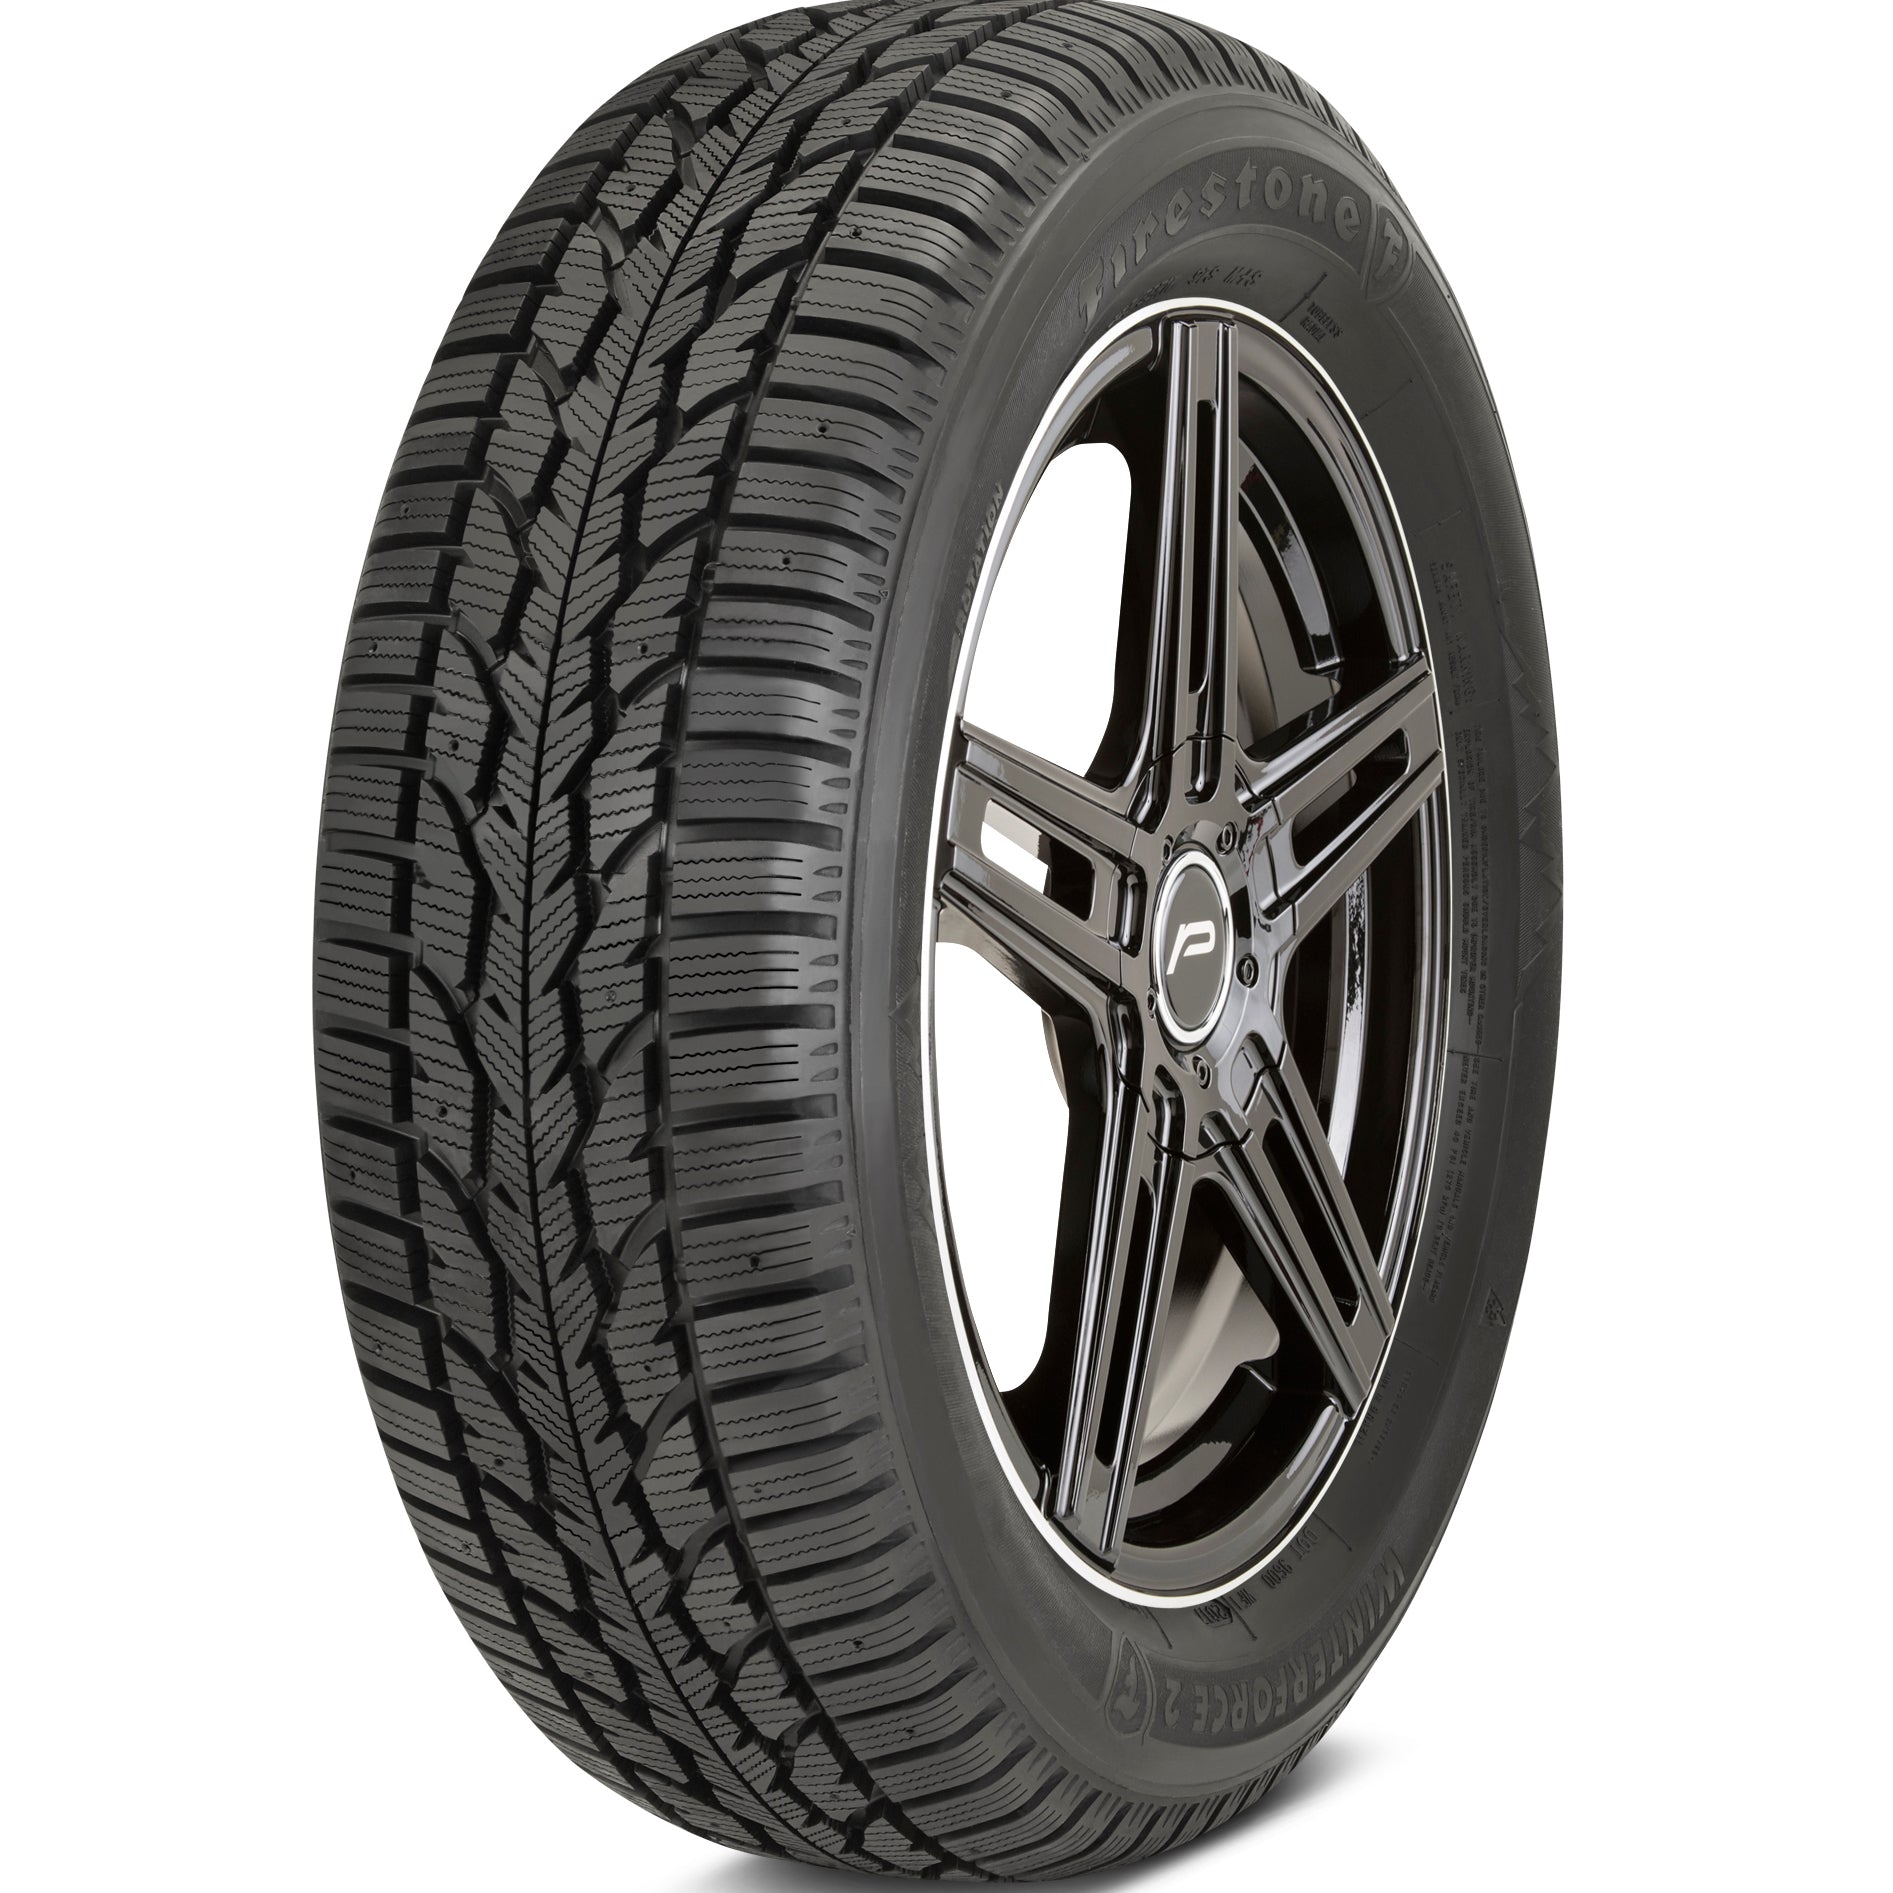 FIRESTONE WINTERFORCE2 205/65R16 (26.5X8.1R 16) Tires